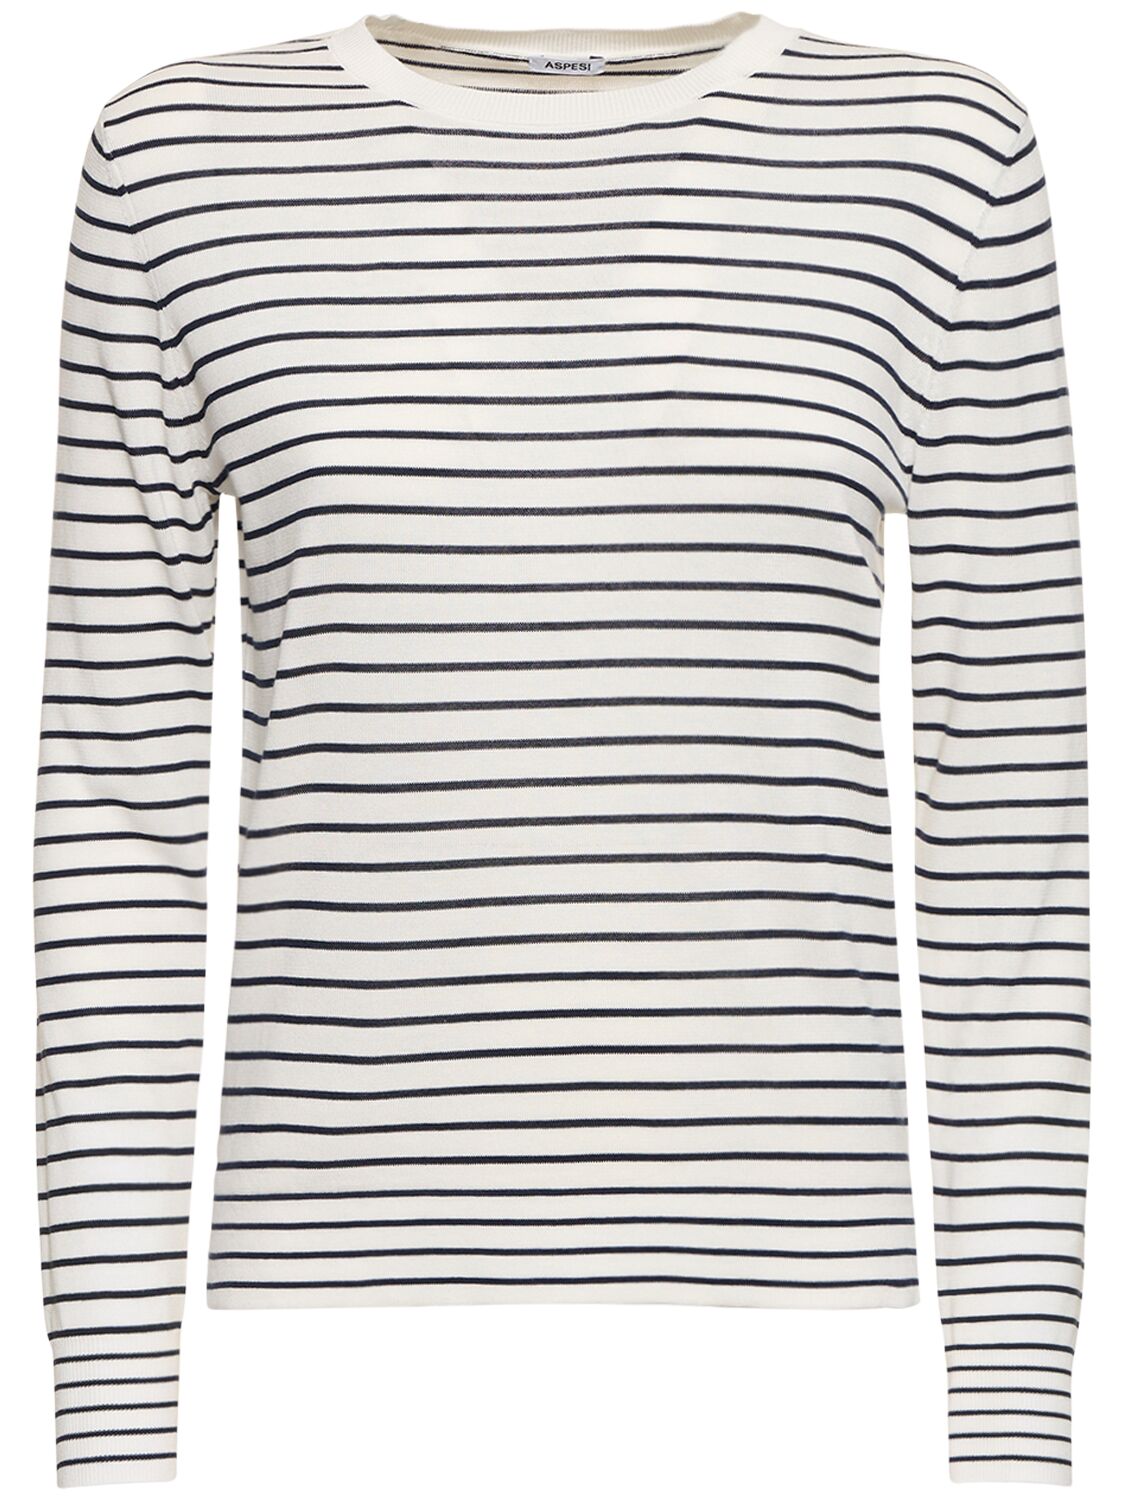 Aspesi Striped Cotton Long Sleeve T-shirt In White,blue